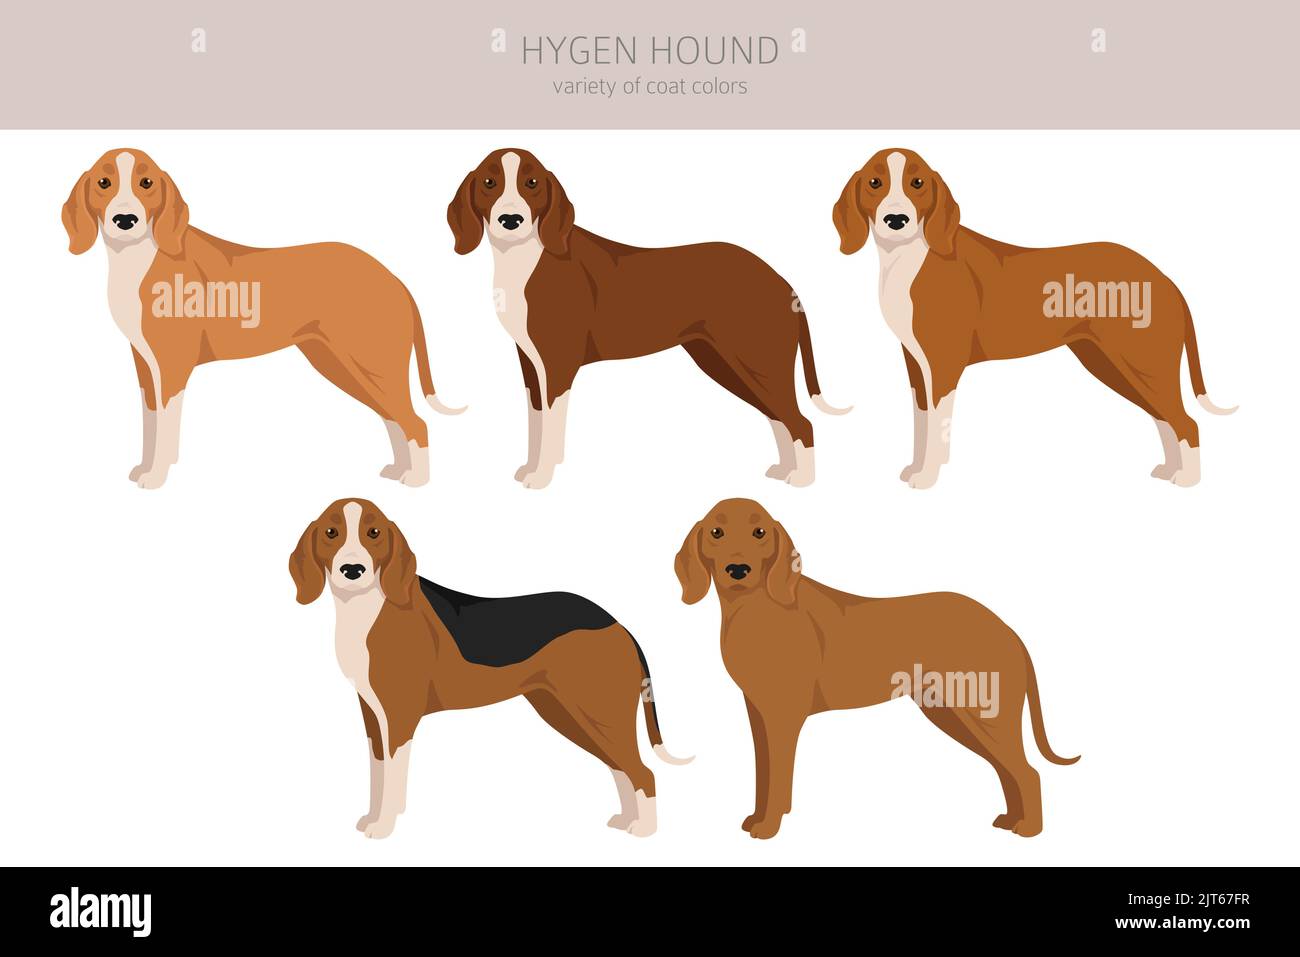 Hygen hound clipart. Different poses, coat colors set.  Vector illustration Stock Vector